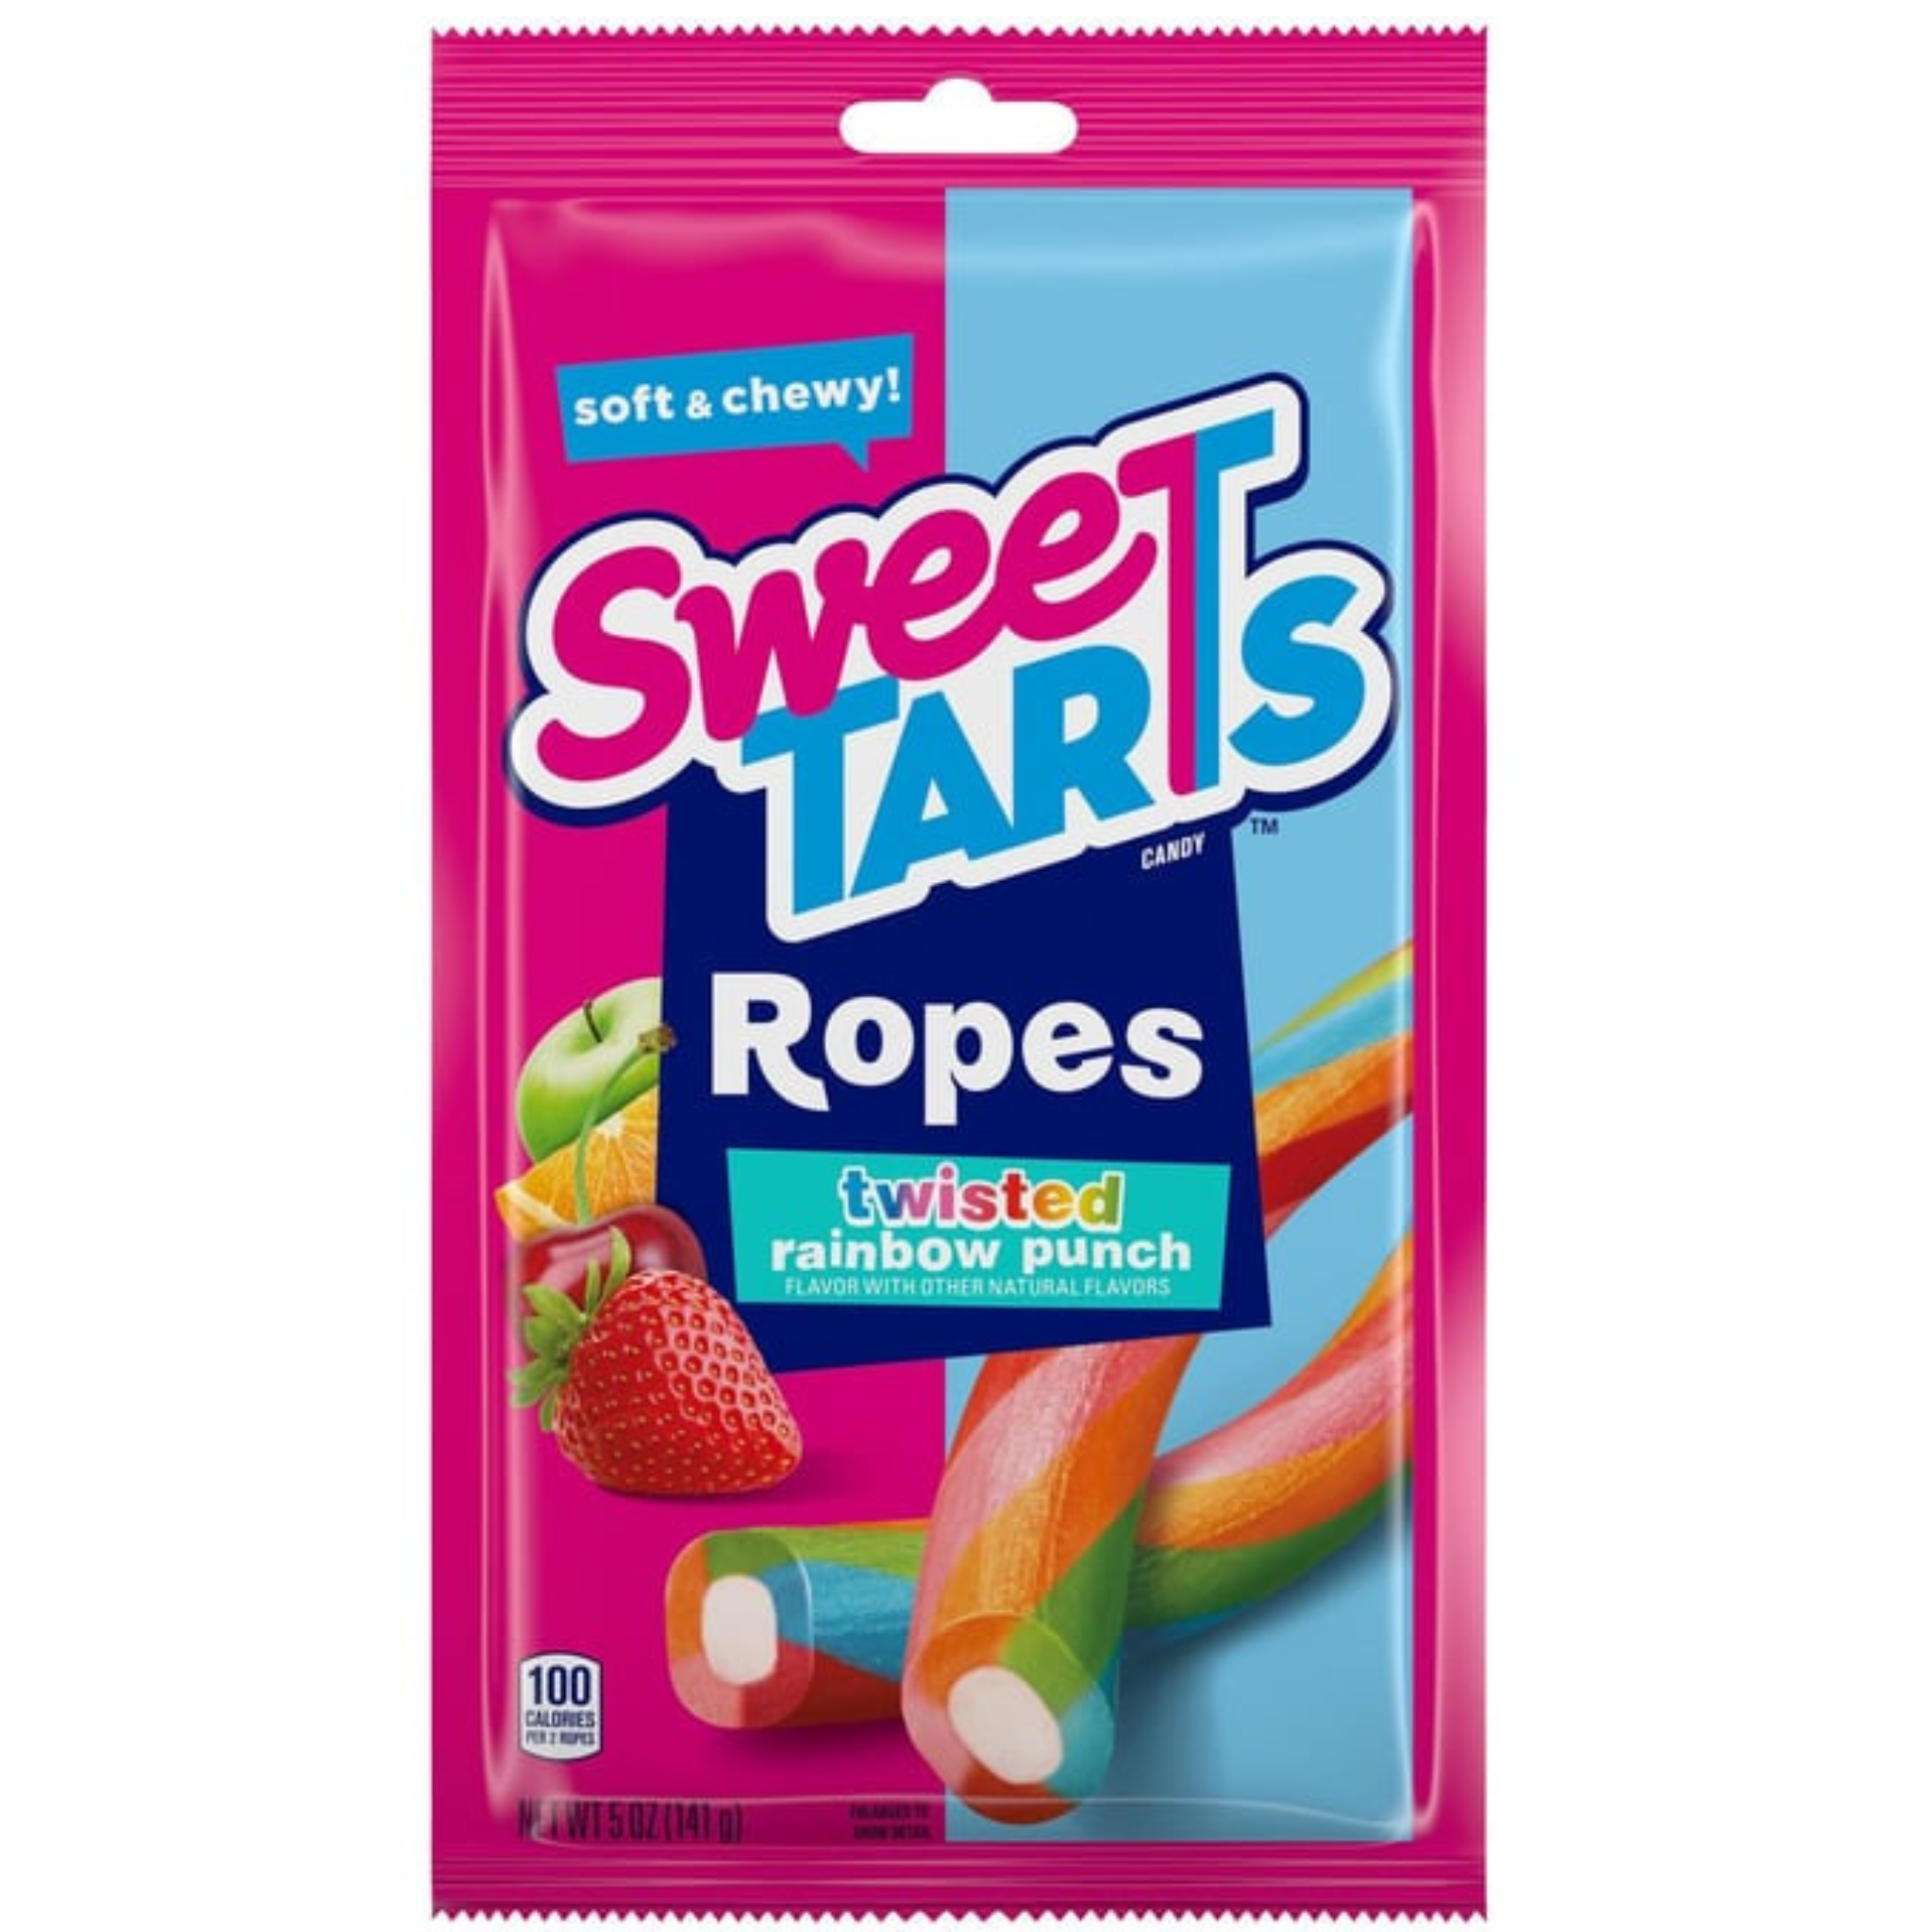 Sweet Tarts Ropes Twisted Rainbow Punch